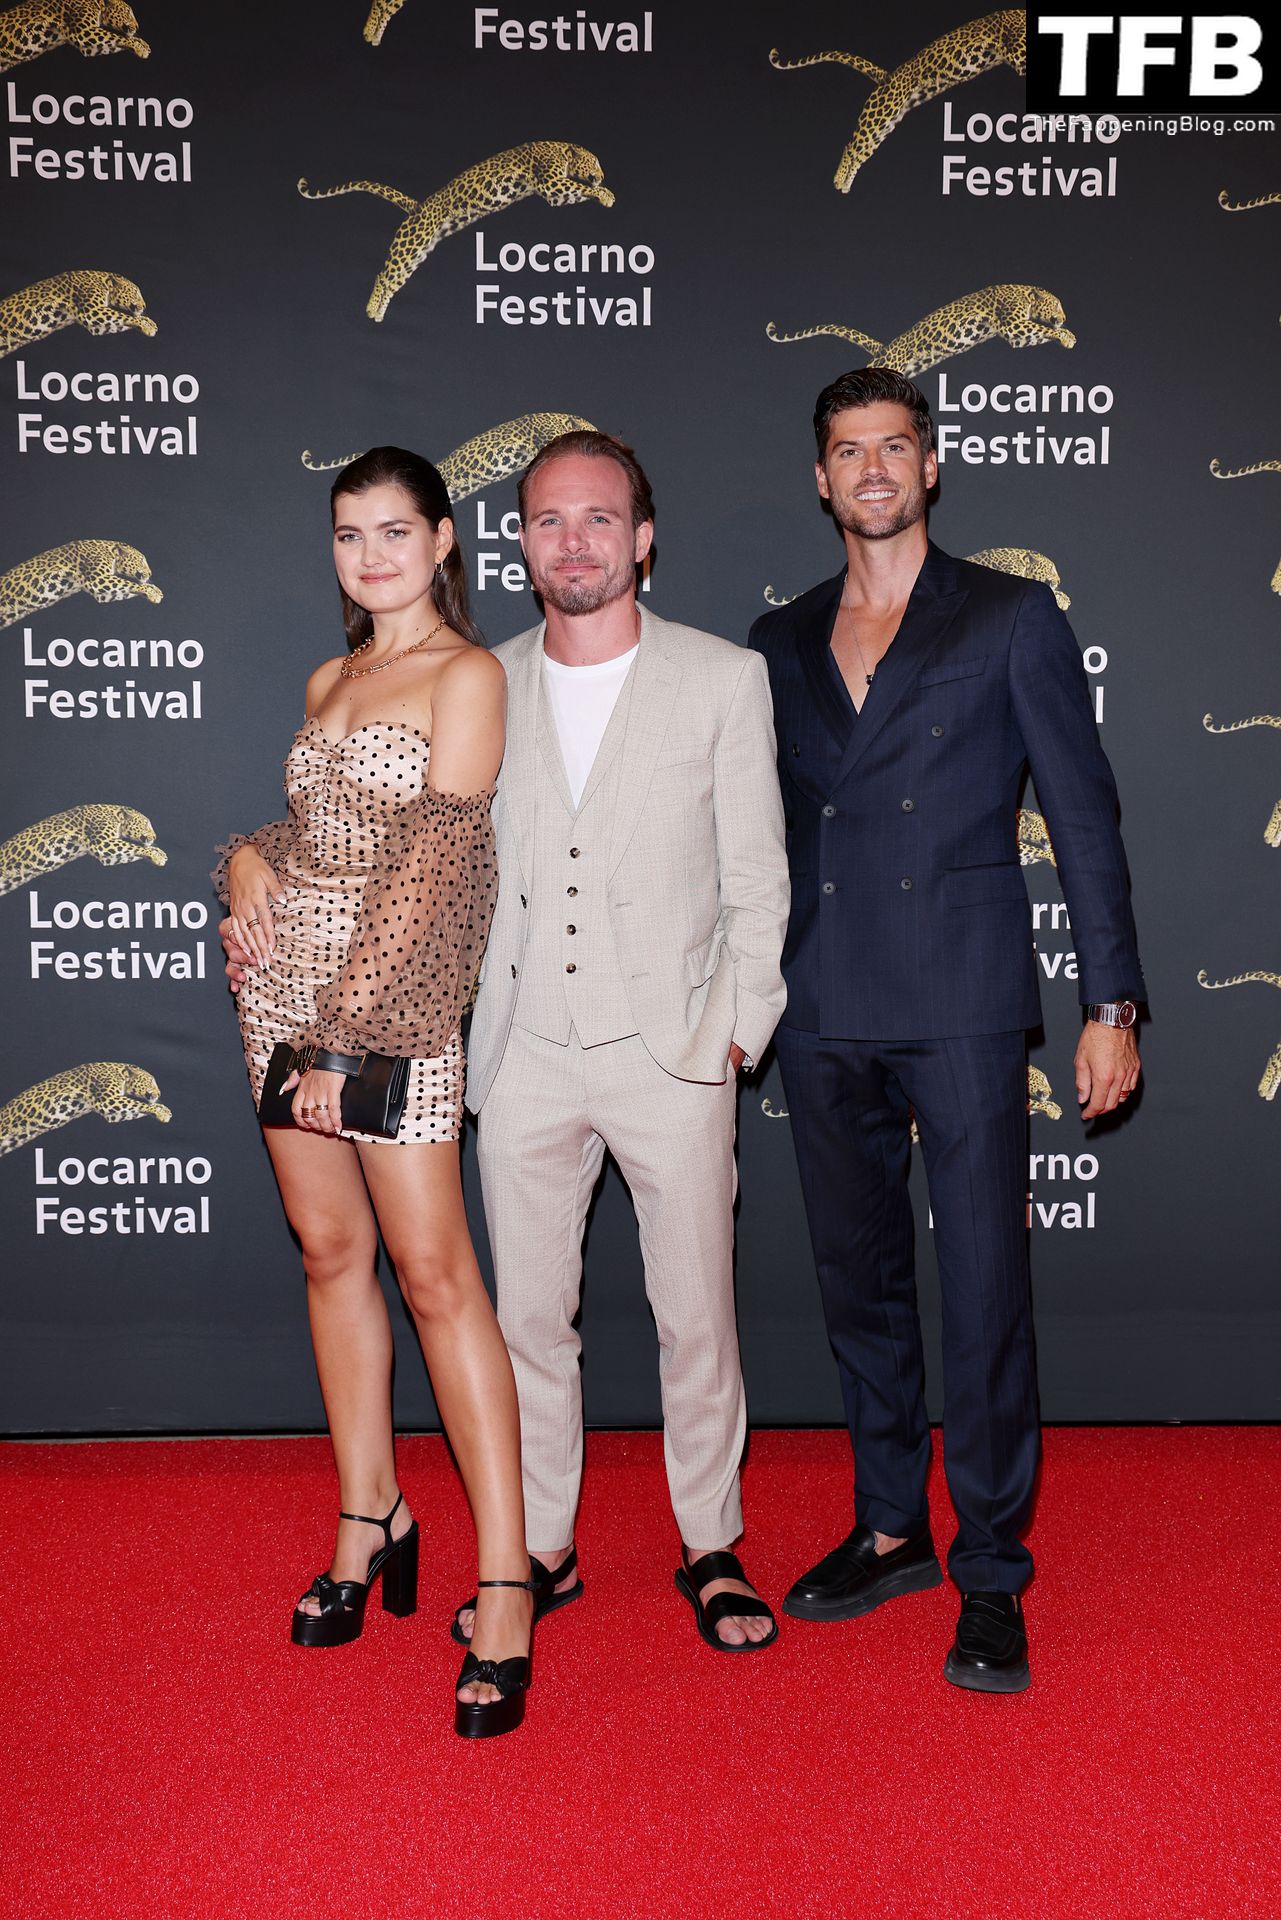 Elvira Legrand Displays Her Sexy Legs at the 75th Locarno Film Festival (43 Photos)